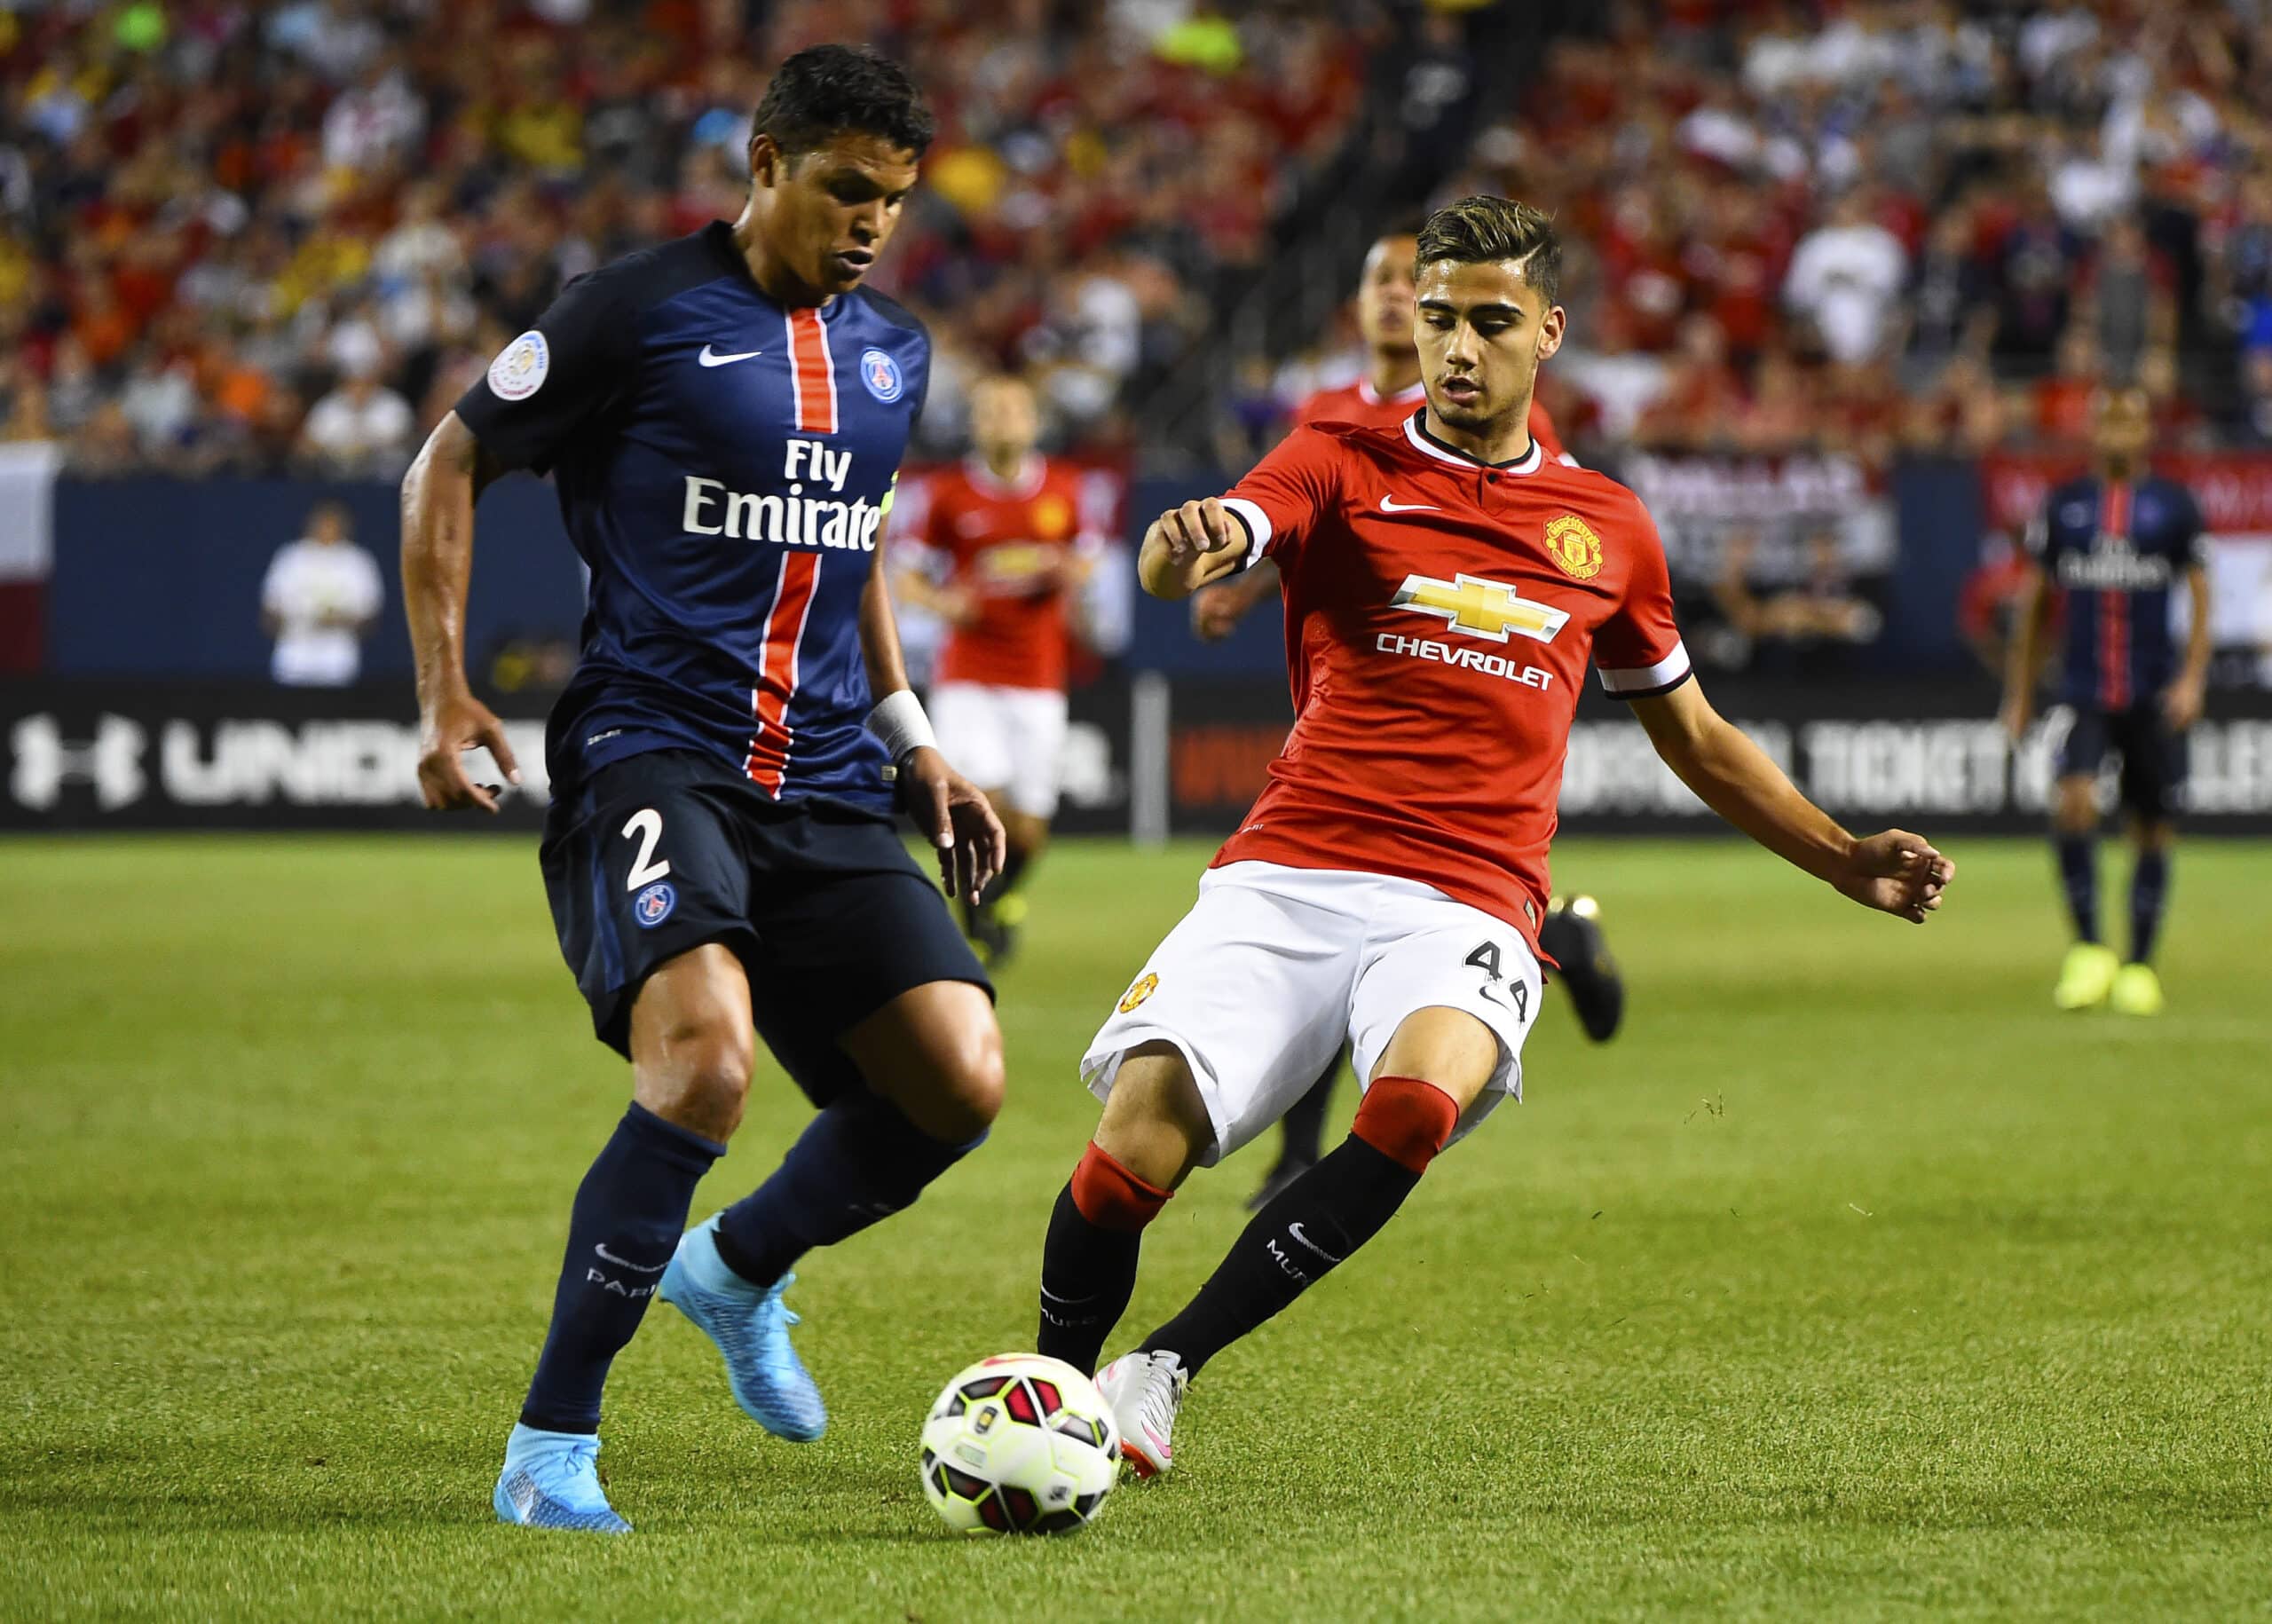 Arctos Mulls Acquiring Stake in $4.6B Paris Saint-Germain